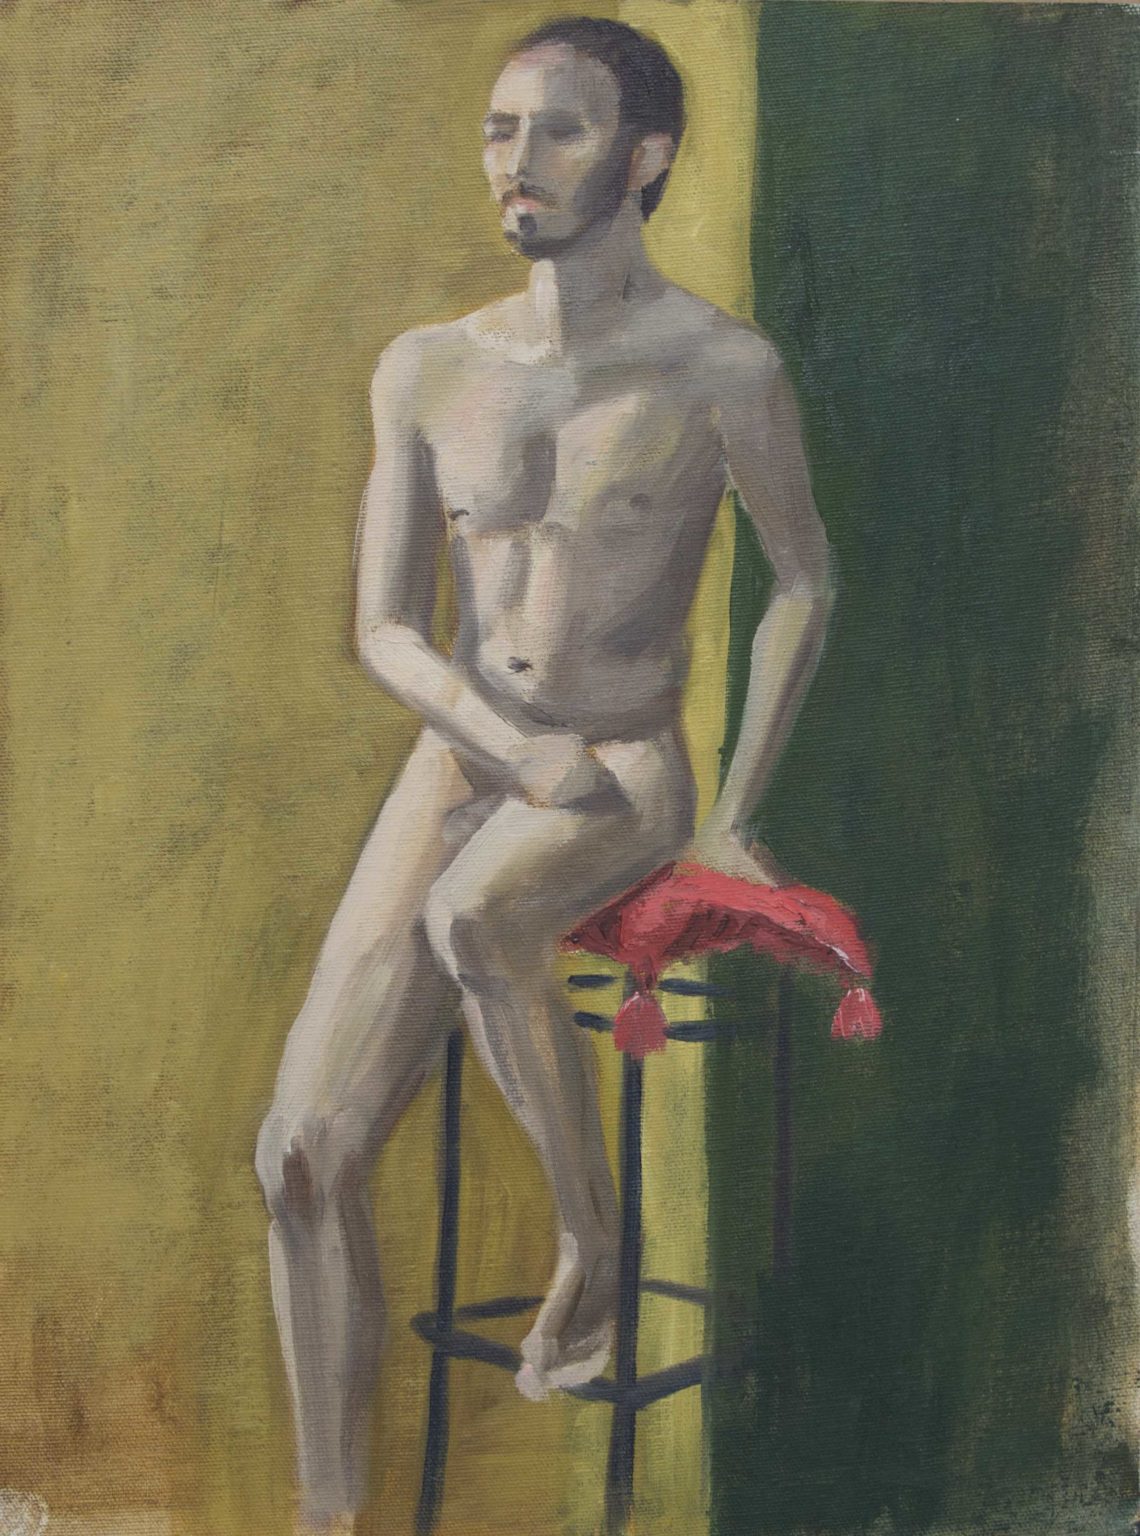 Male nude on pink cushion | Oil on linen board, 40cm x 30cm